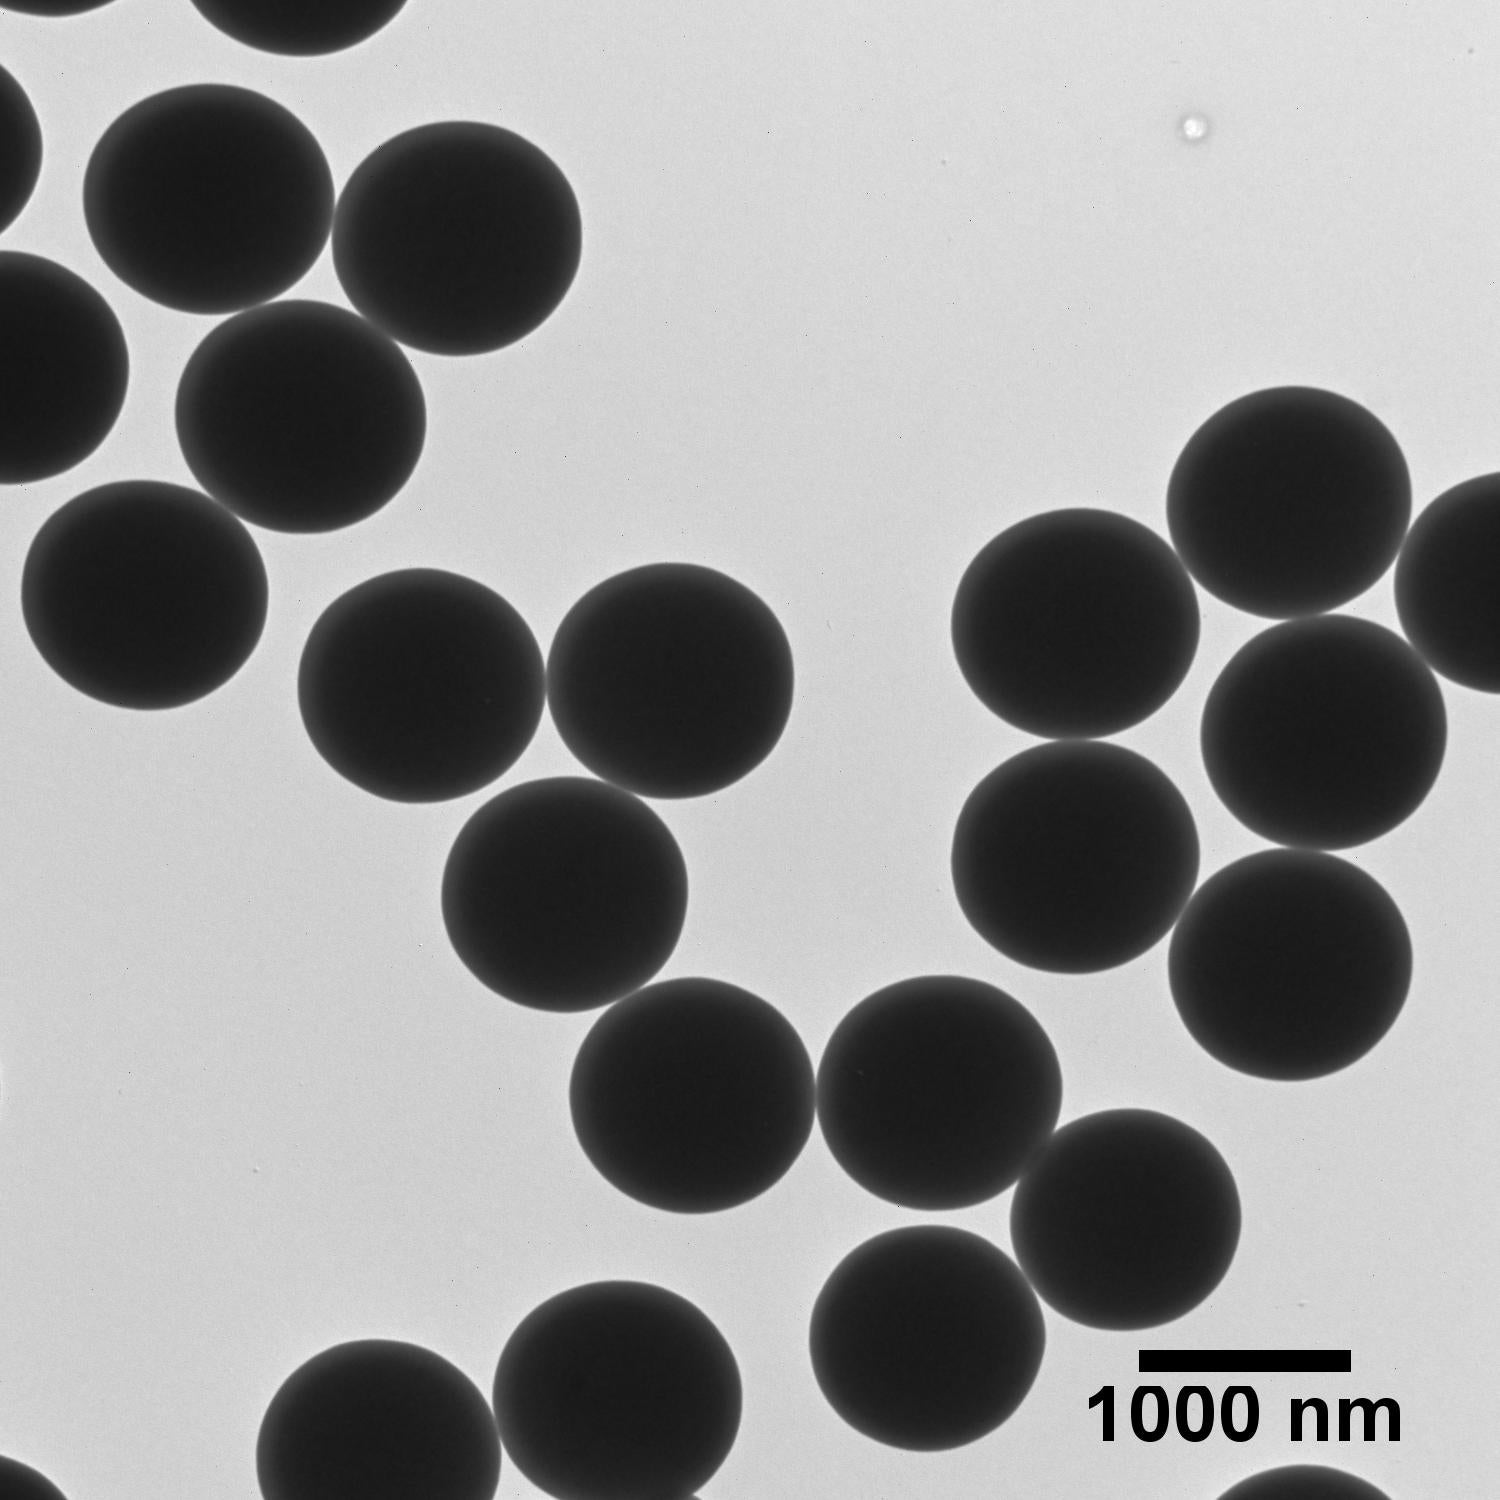 TEM image of 1 µm NanoXact silica nanospheres.